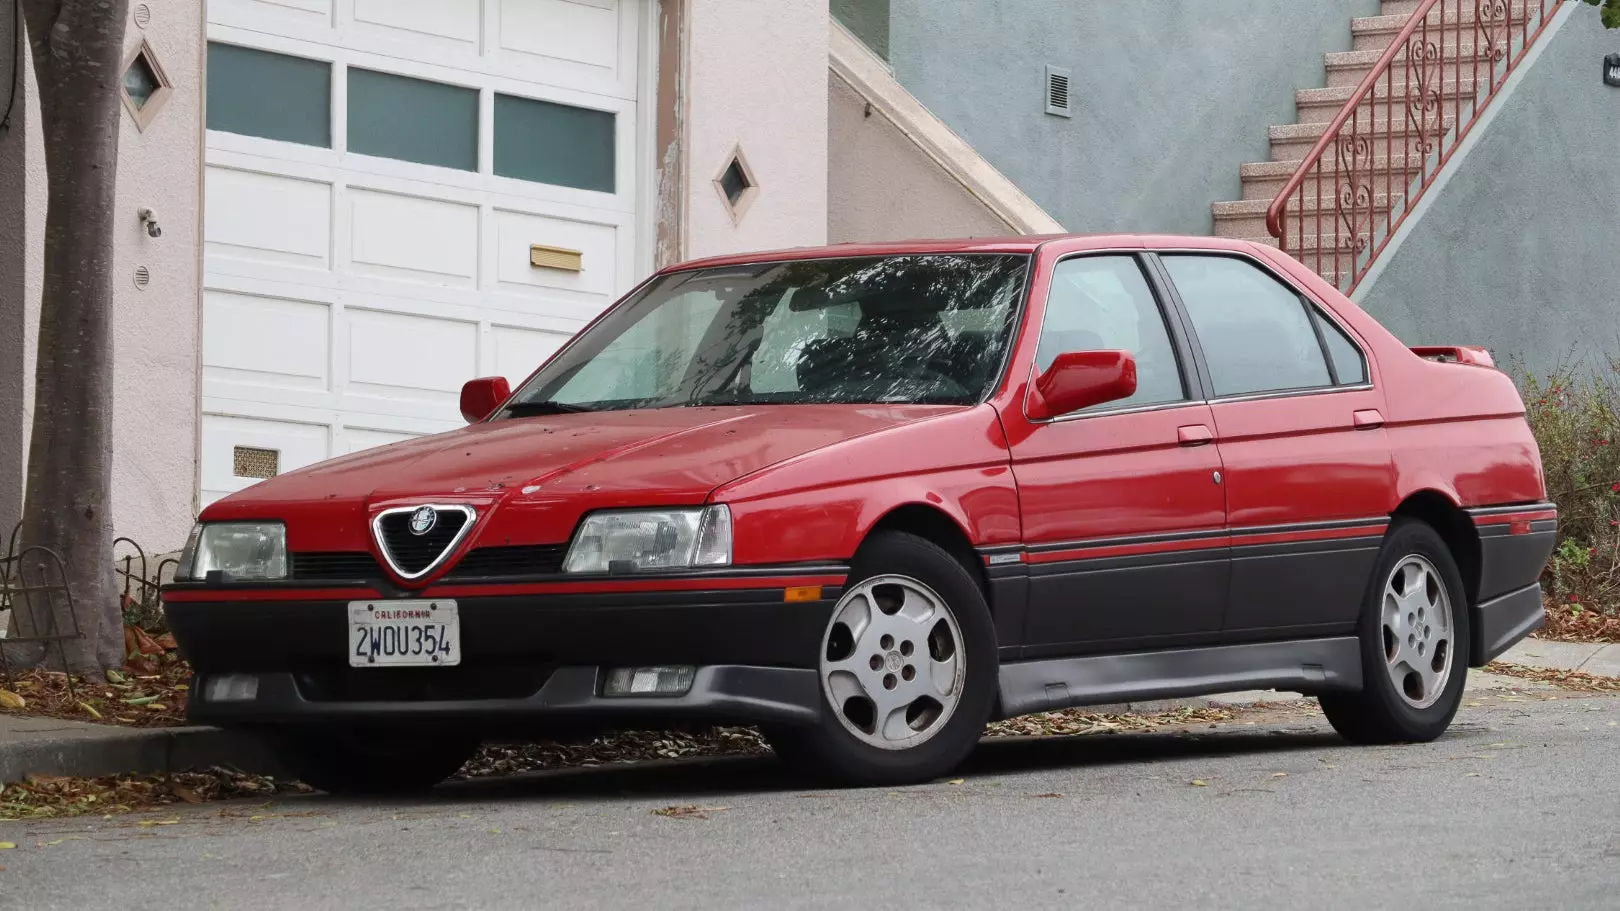 This Pristine Italian Sedan Represents the Last Alfa Romeo Sold in America Until 2016 | Autance